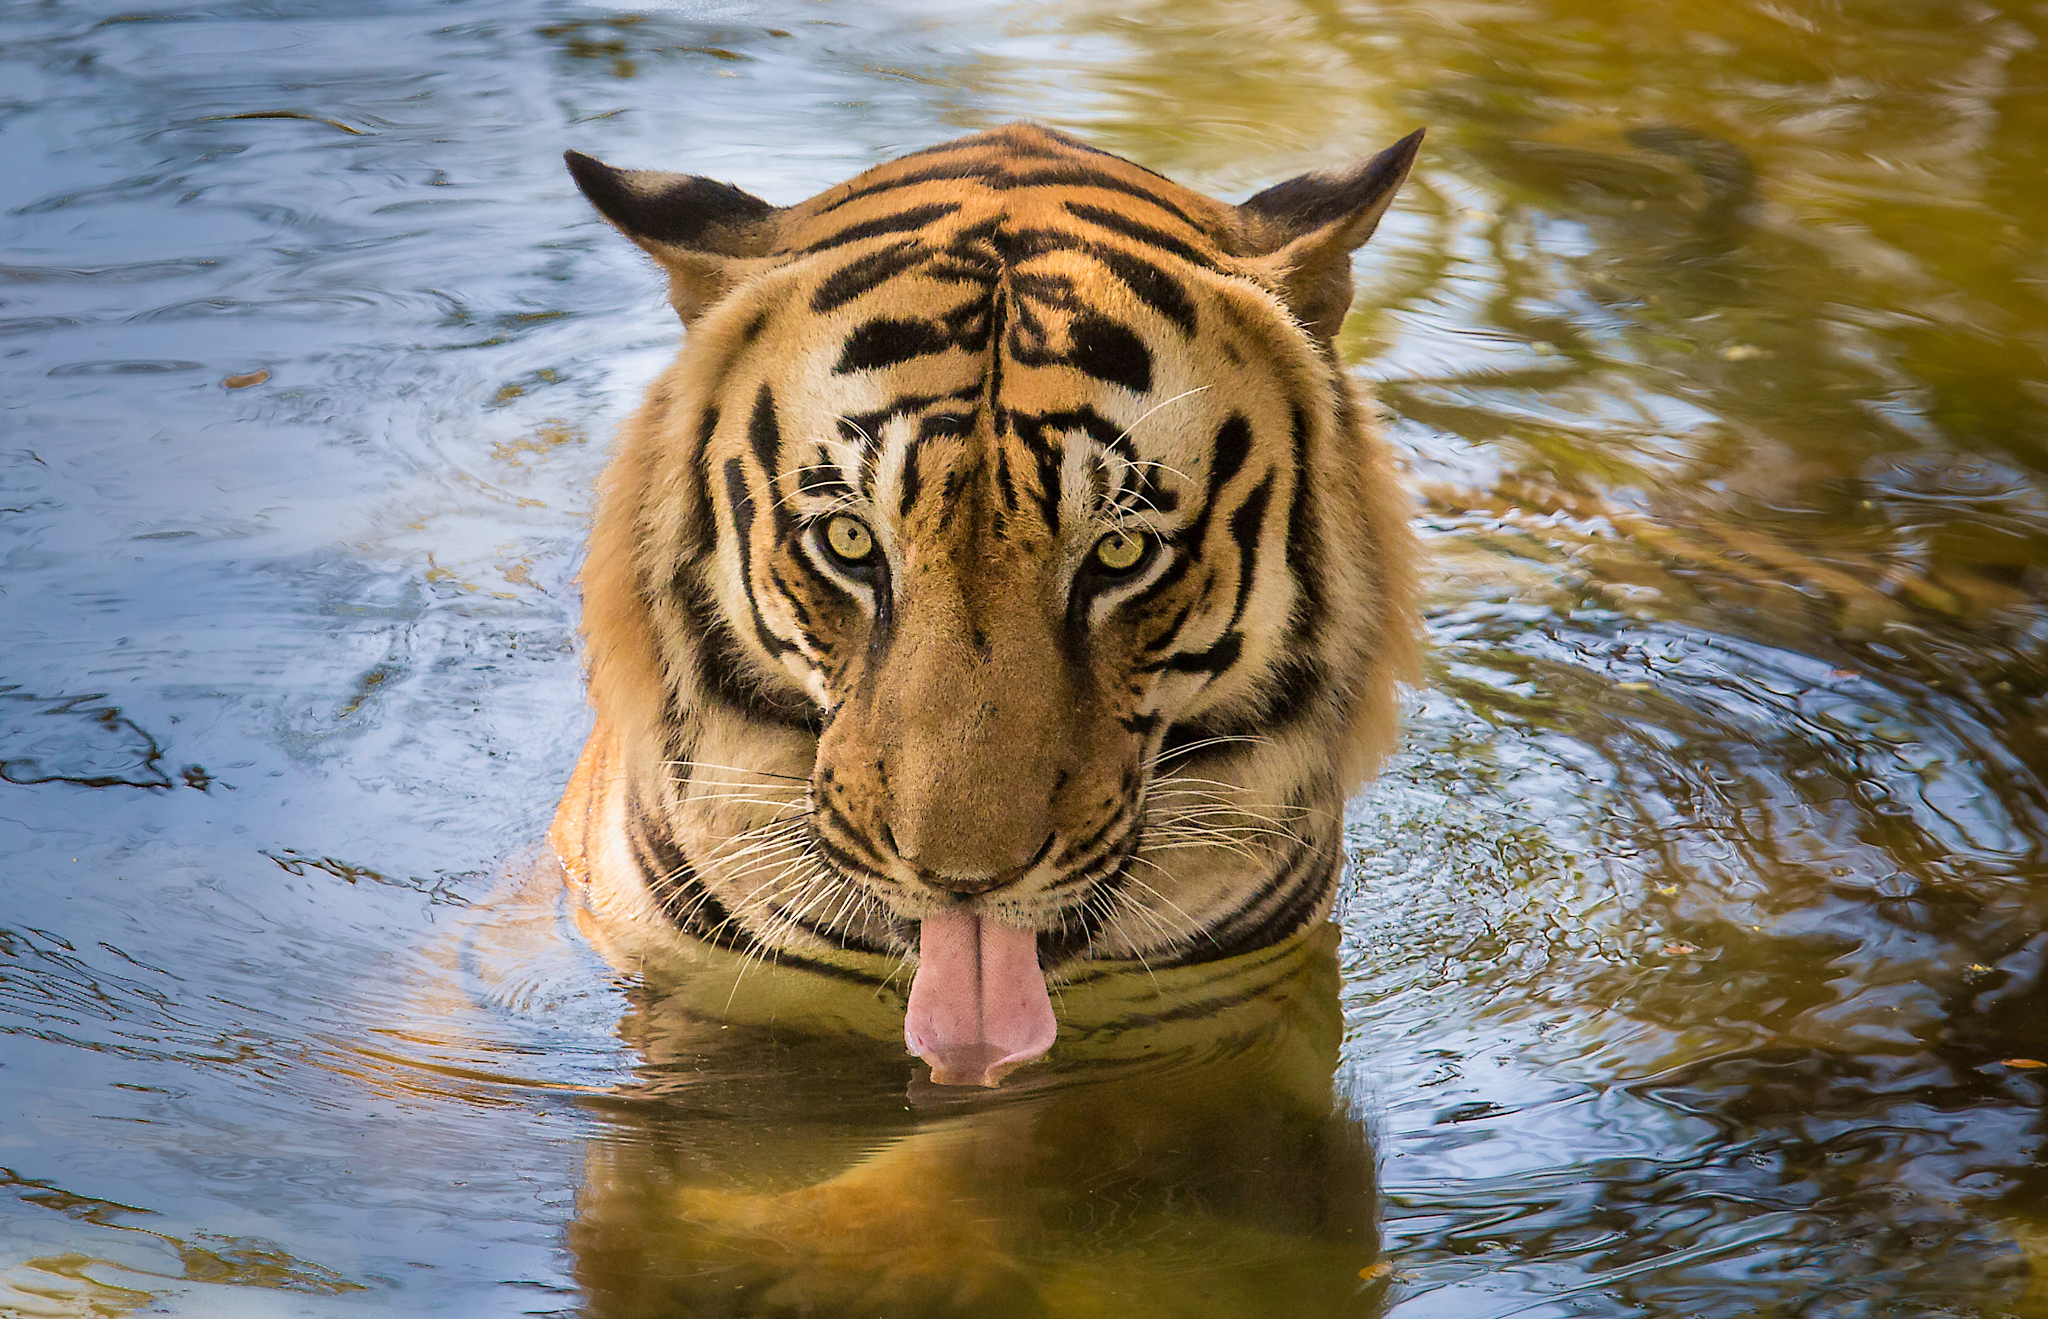 107320 descargar imagen animales, agua, depredador, tigre, idioma, lengua: fondos de pantalla y protectores de pantalla gratis